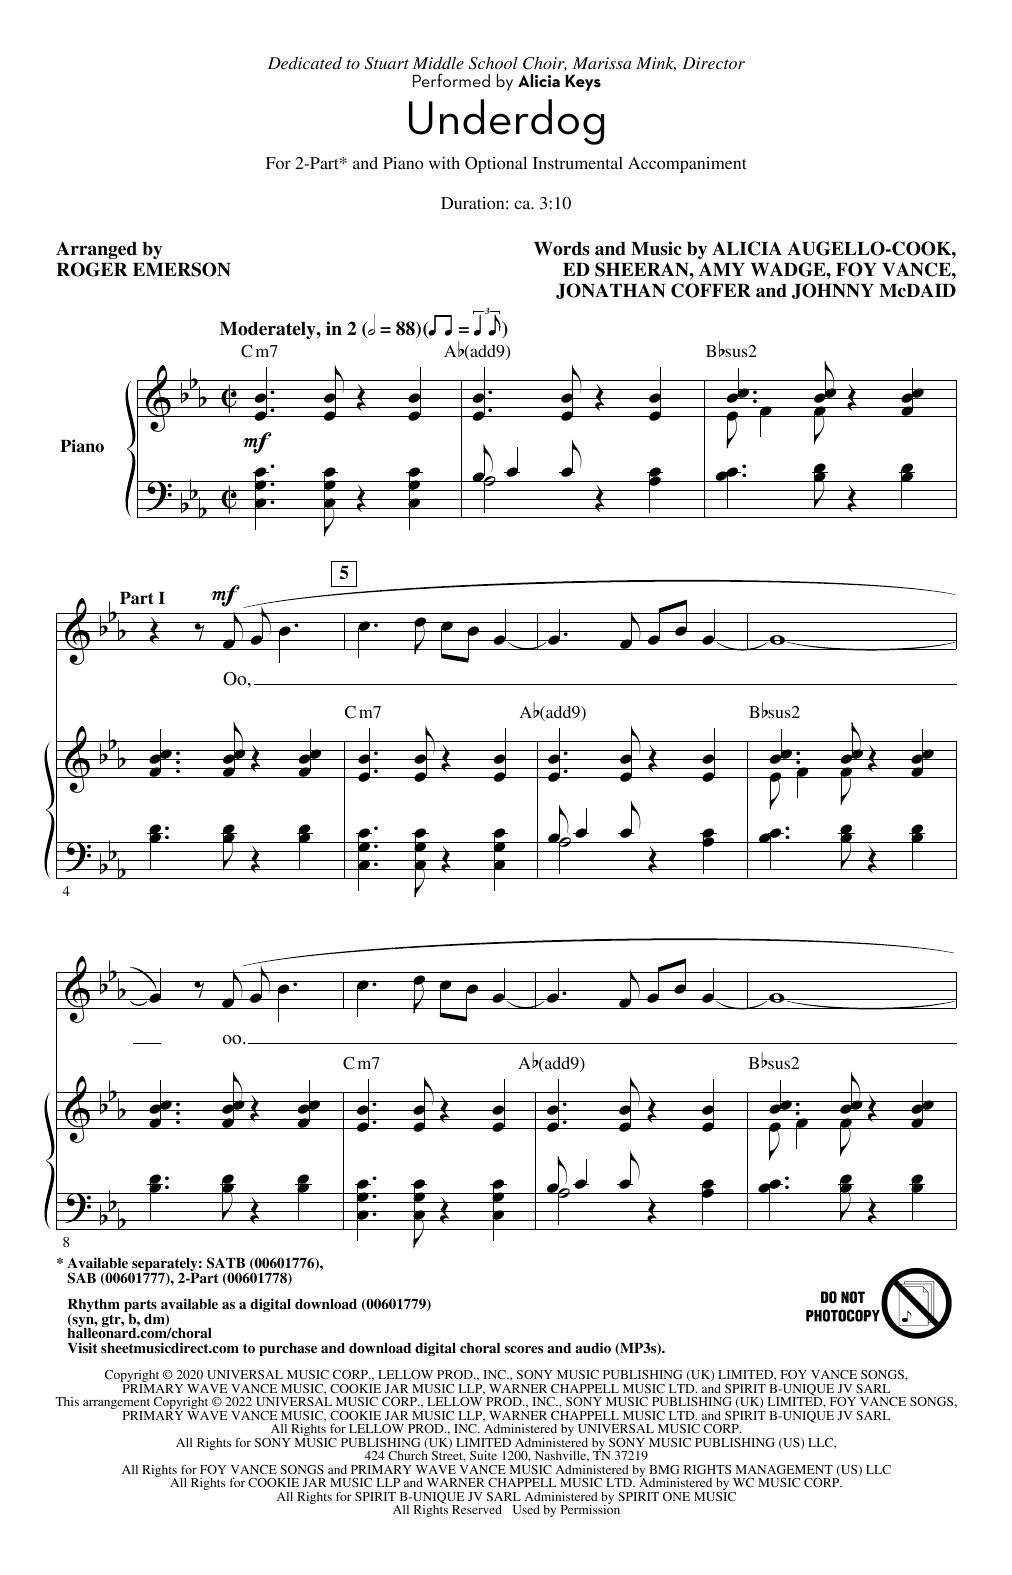 Alicia Keys Underdog (arr. Roger Emerson) Sheet Music Notes & Chords for 2-Part Choir - Download or Print PDF